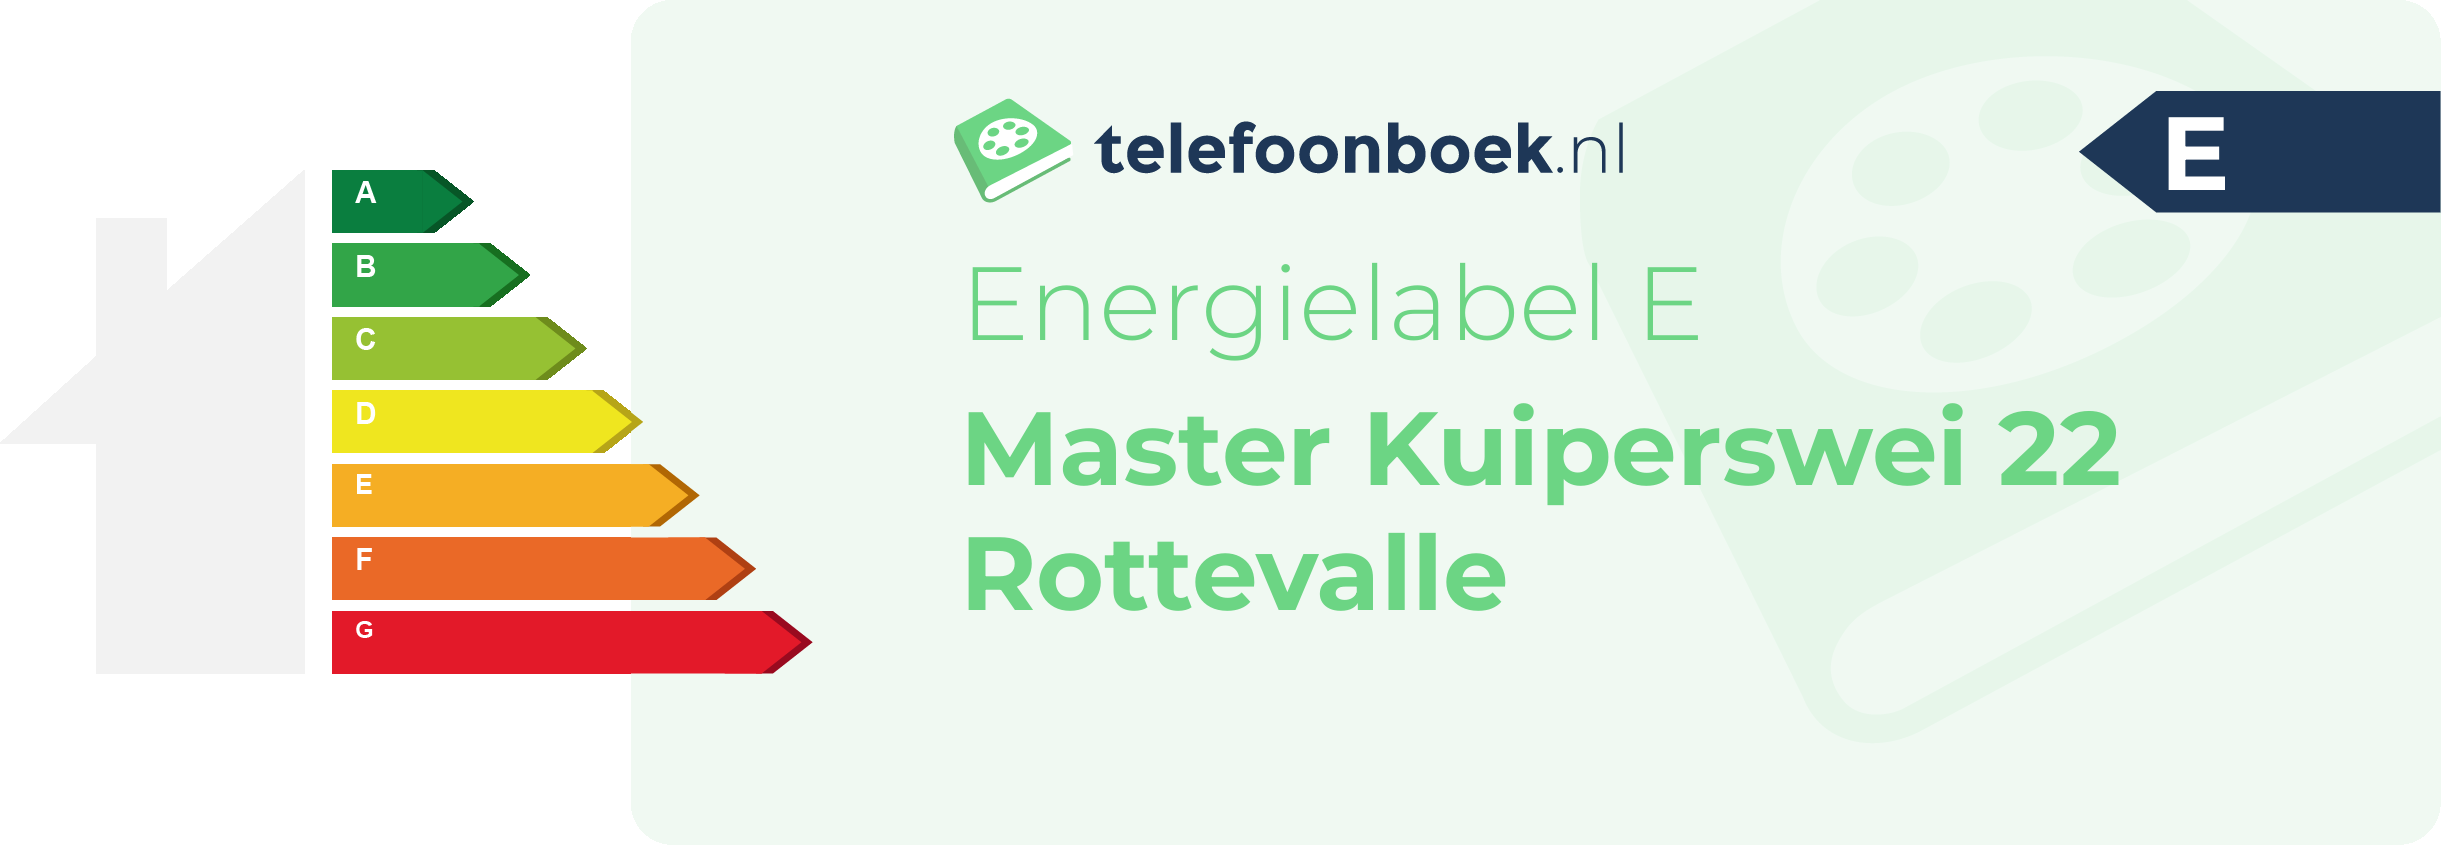 Energielabel Master Kuiperswei 22 Rottevalle